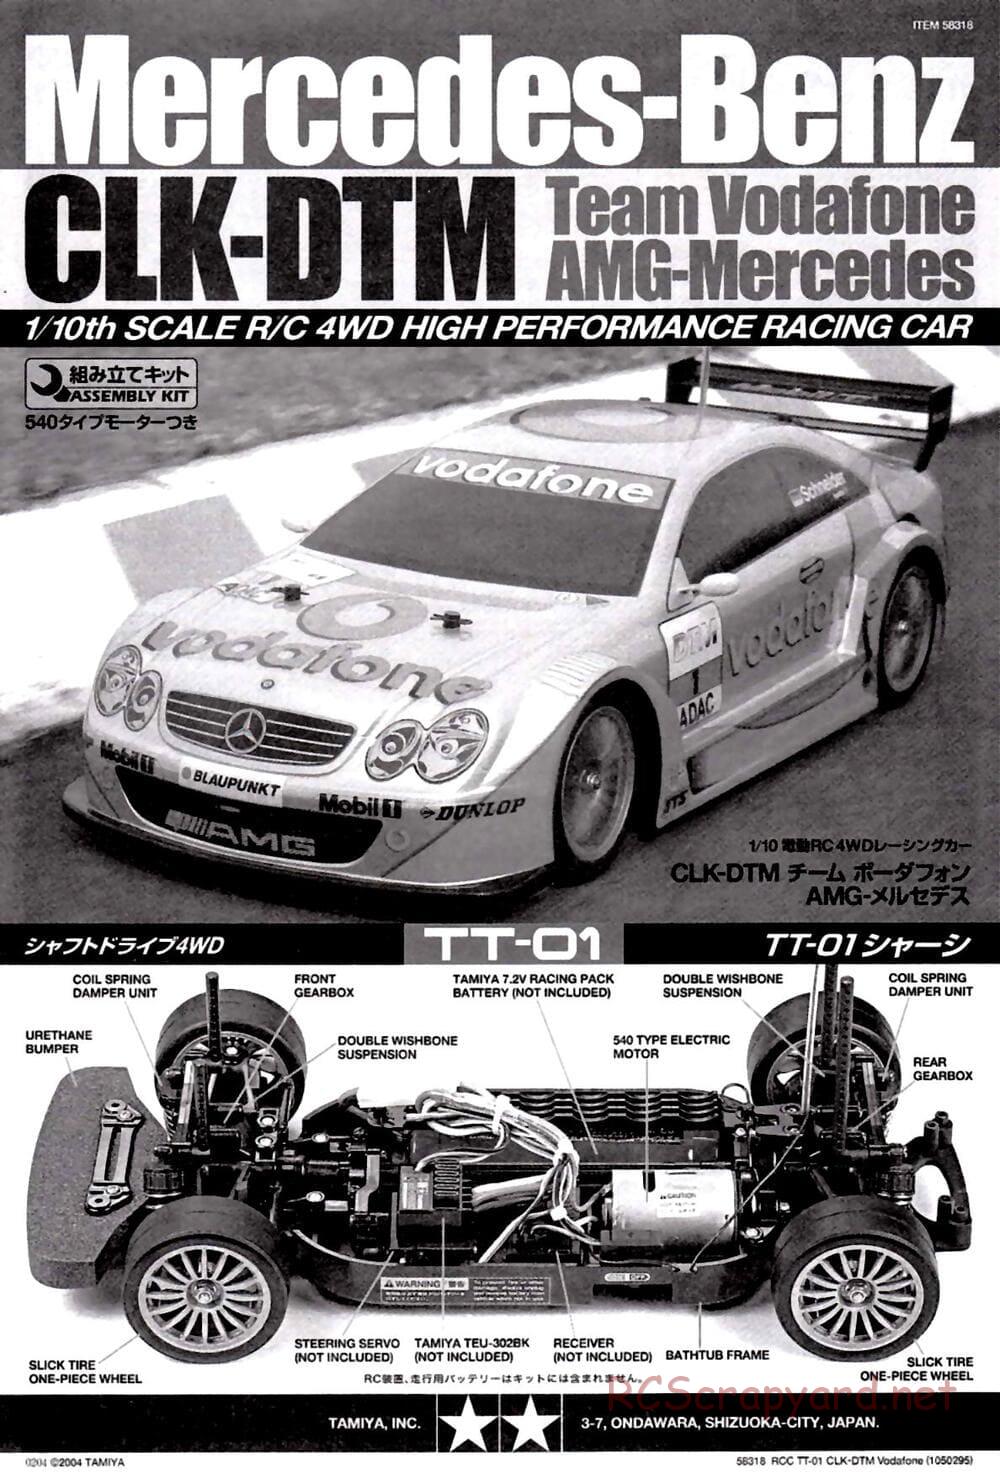 Tamiya - Mercedes-Benz CLK-DTM Team Vodafone AMG-Mercedes - TT-01 Chassis - Manual - Page 1